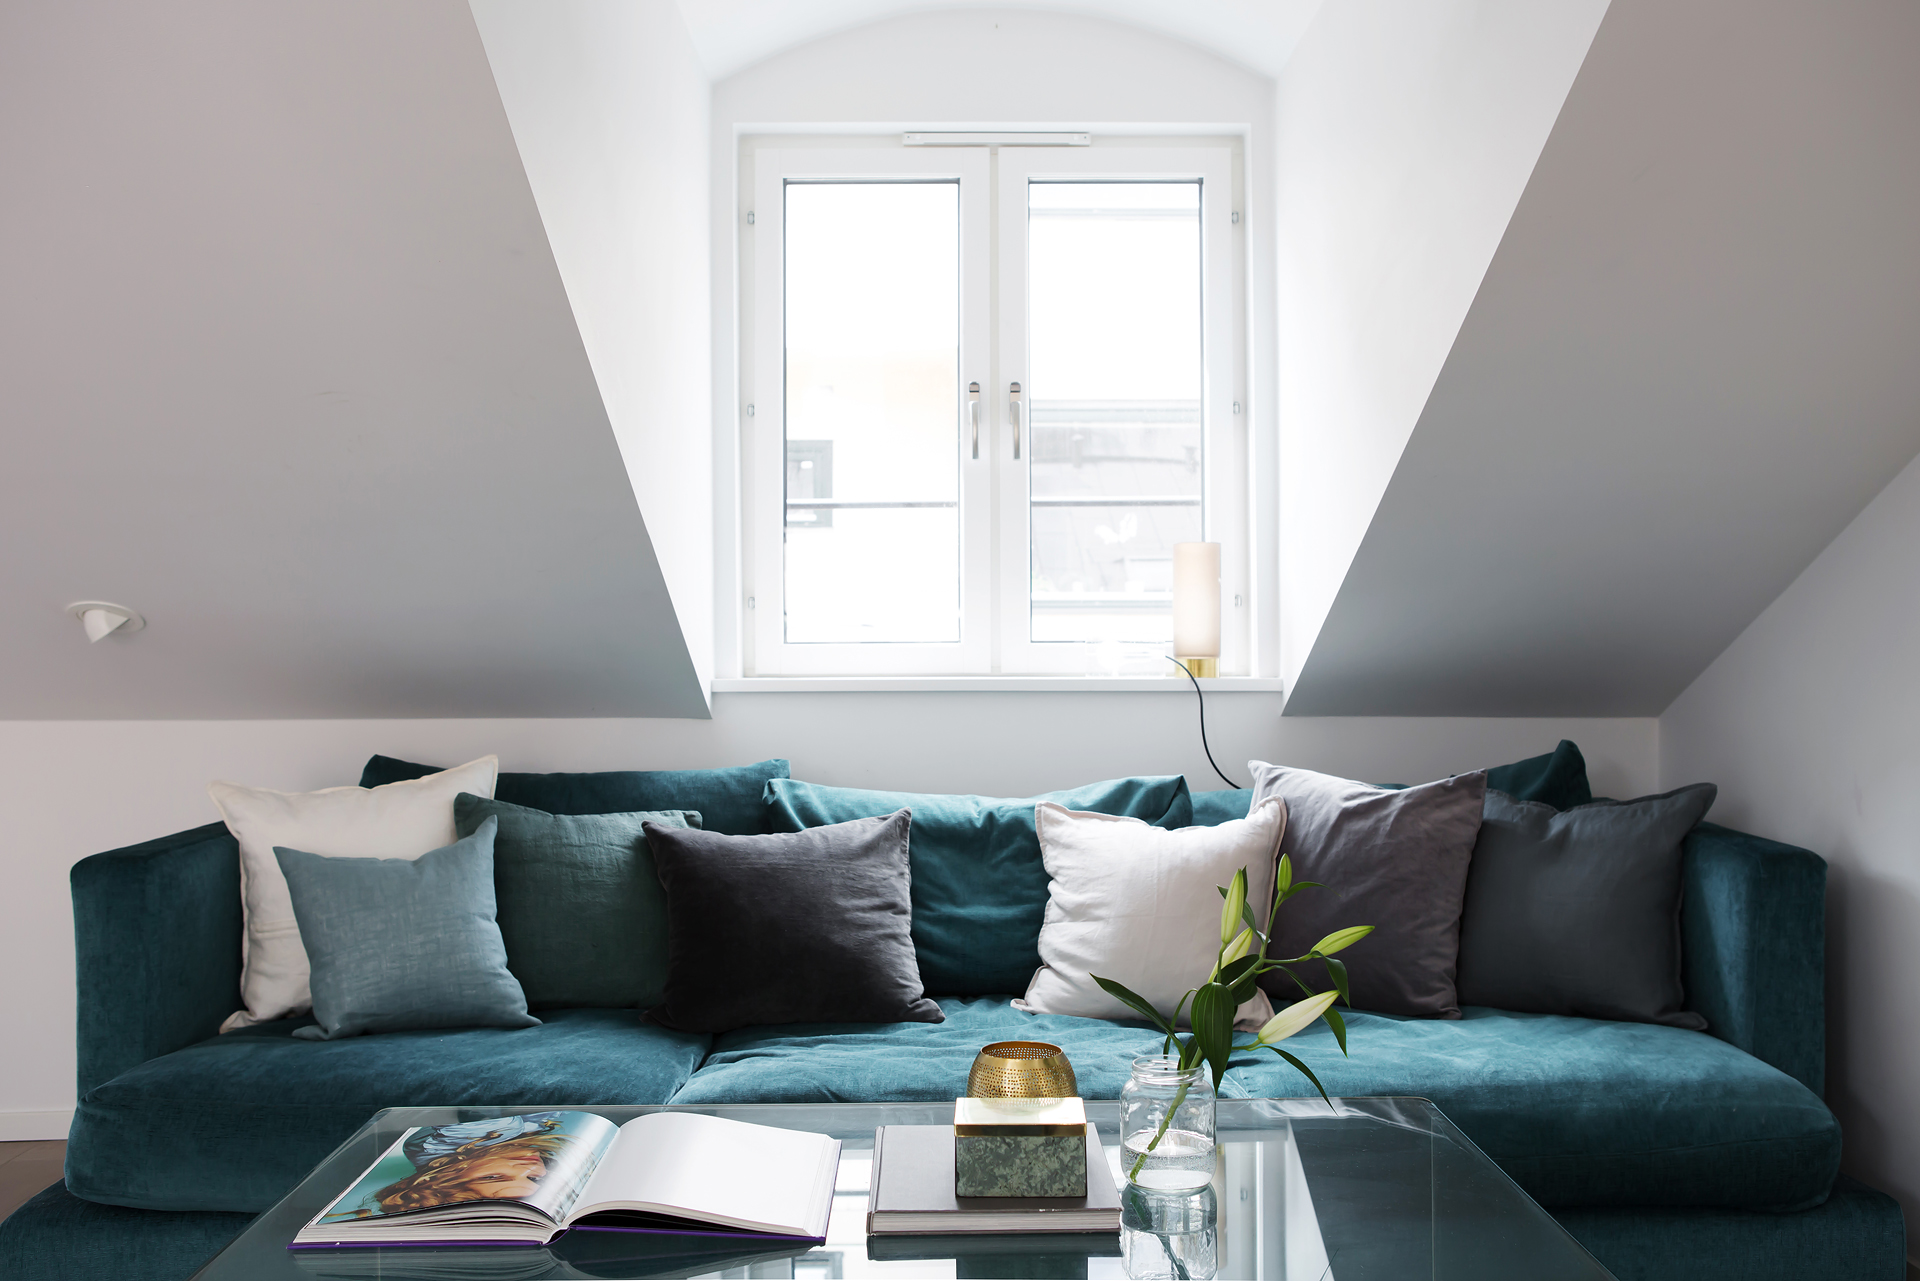 delikatissen Vuelve el terciopelo a los sofás tendencias 2016 decor tejidos modernos sofá de terciopelo sofá azul muebles modernos clásicos renovados blog decoración nórdica 